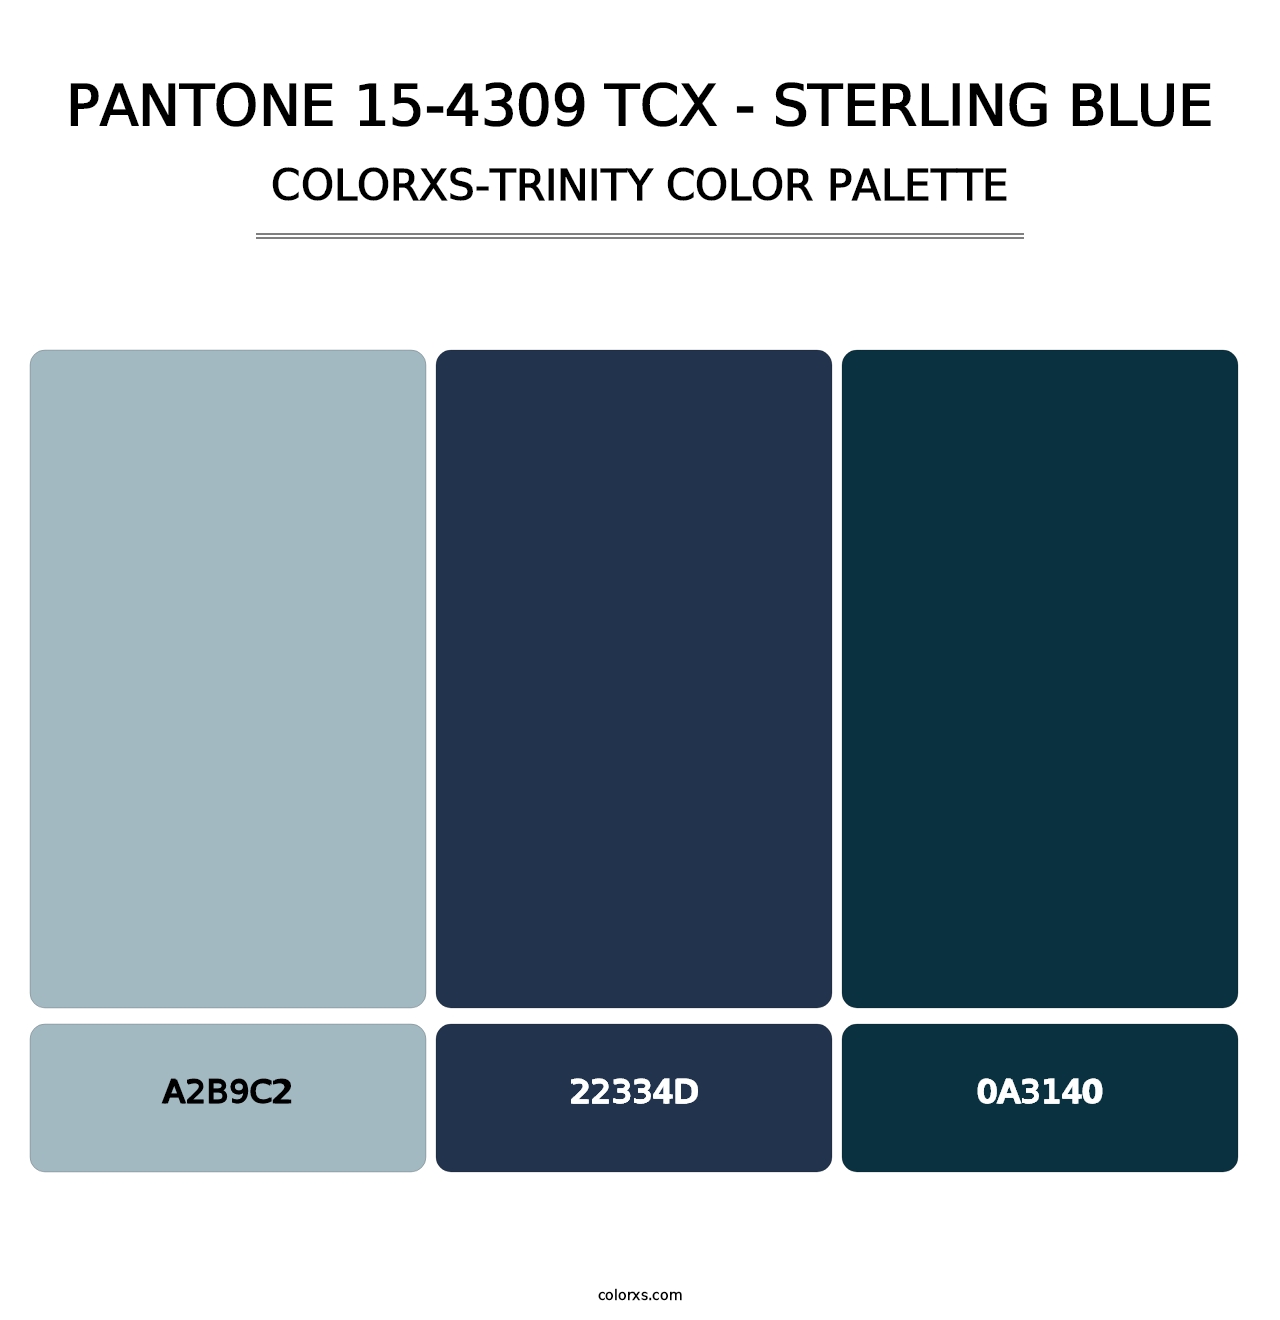 PANTONE 15-4309 TCX - Sterling Blue - Colorxs Trinity Palette